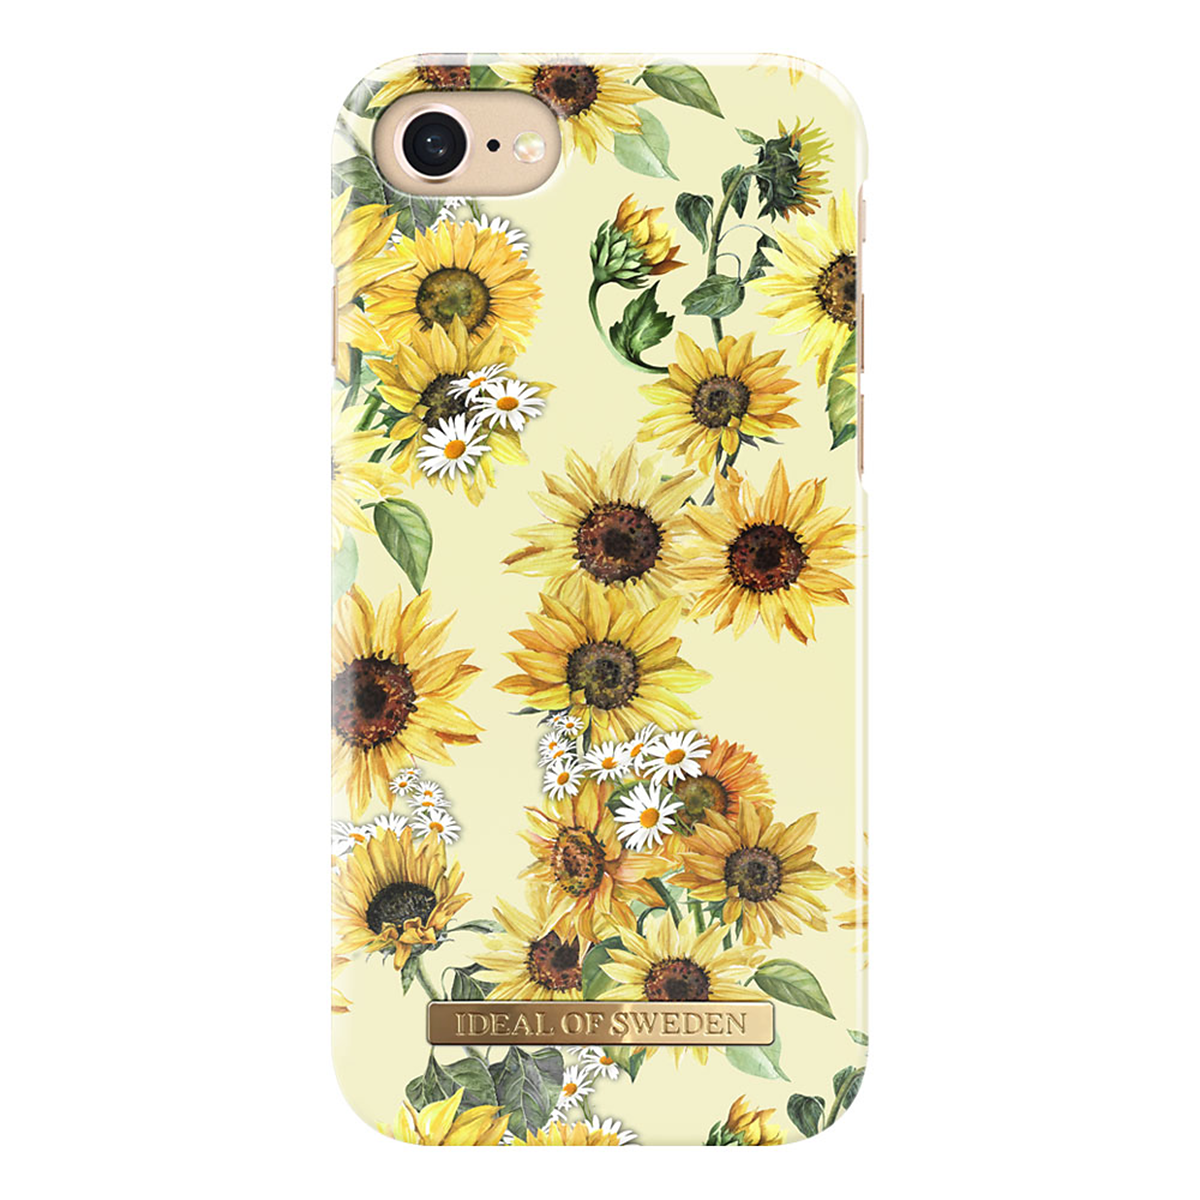 iDeal Fashion Case magnetskal iPhone 8/7/6, Sunflower Lemonade